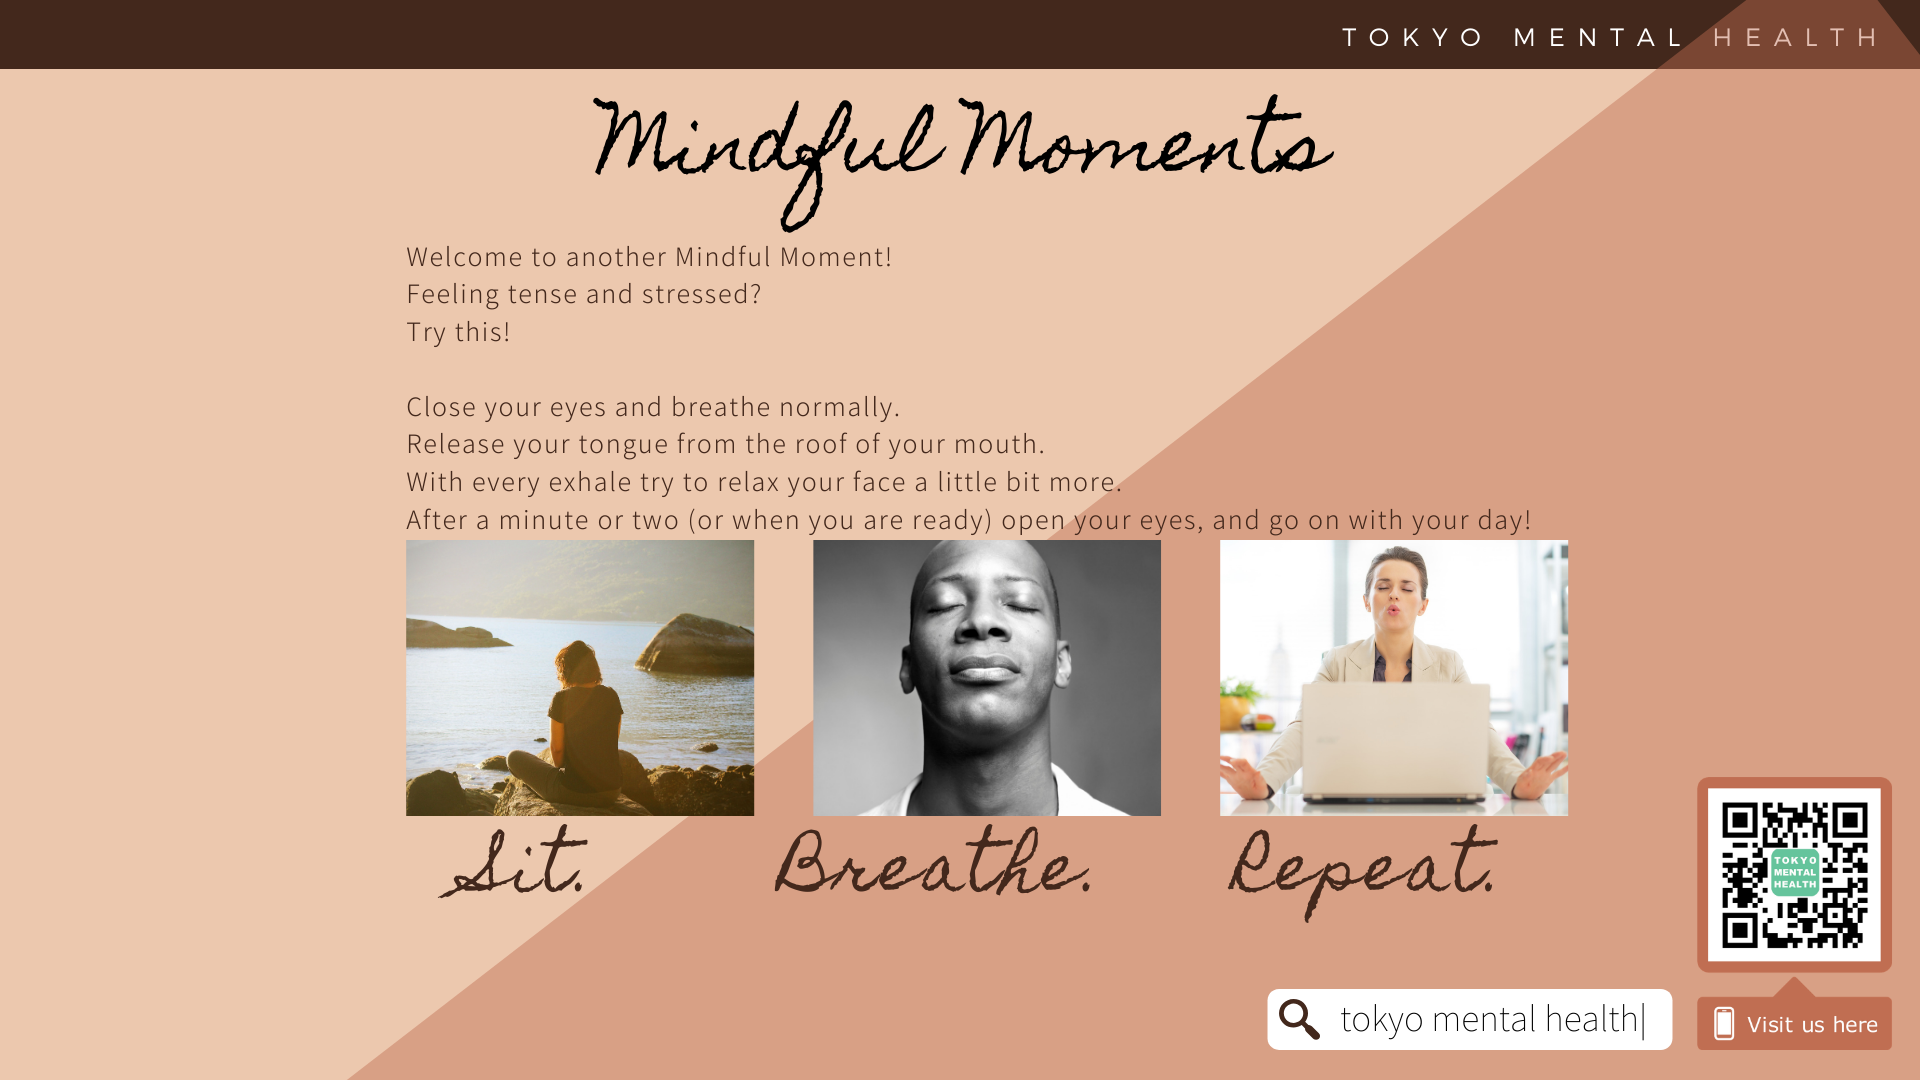 Mindful Moments at Tokyo Mental Health